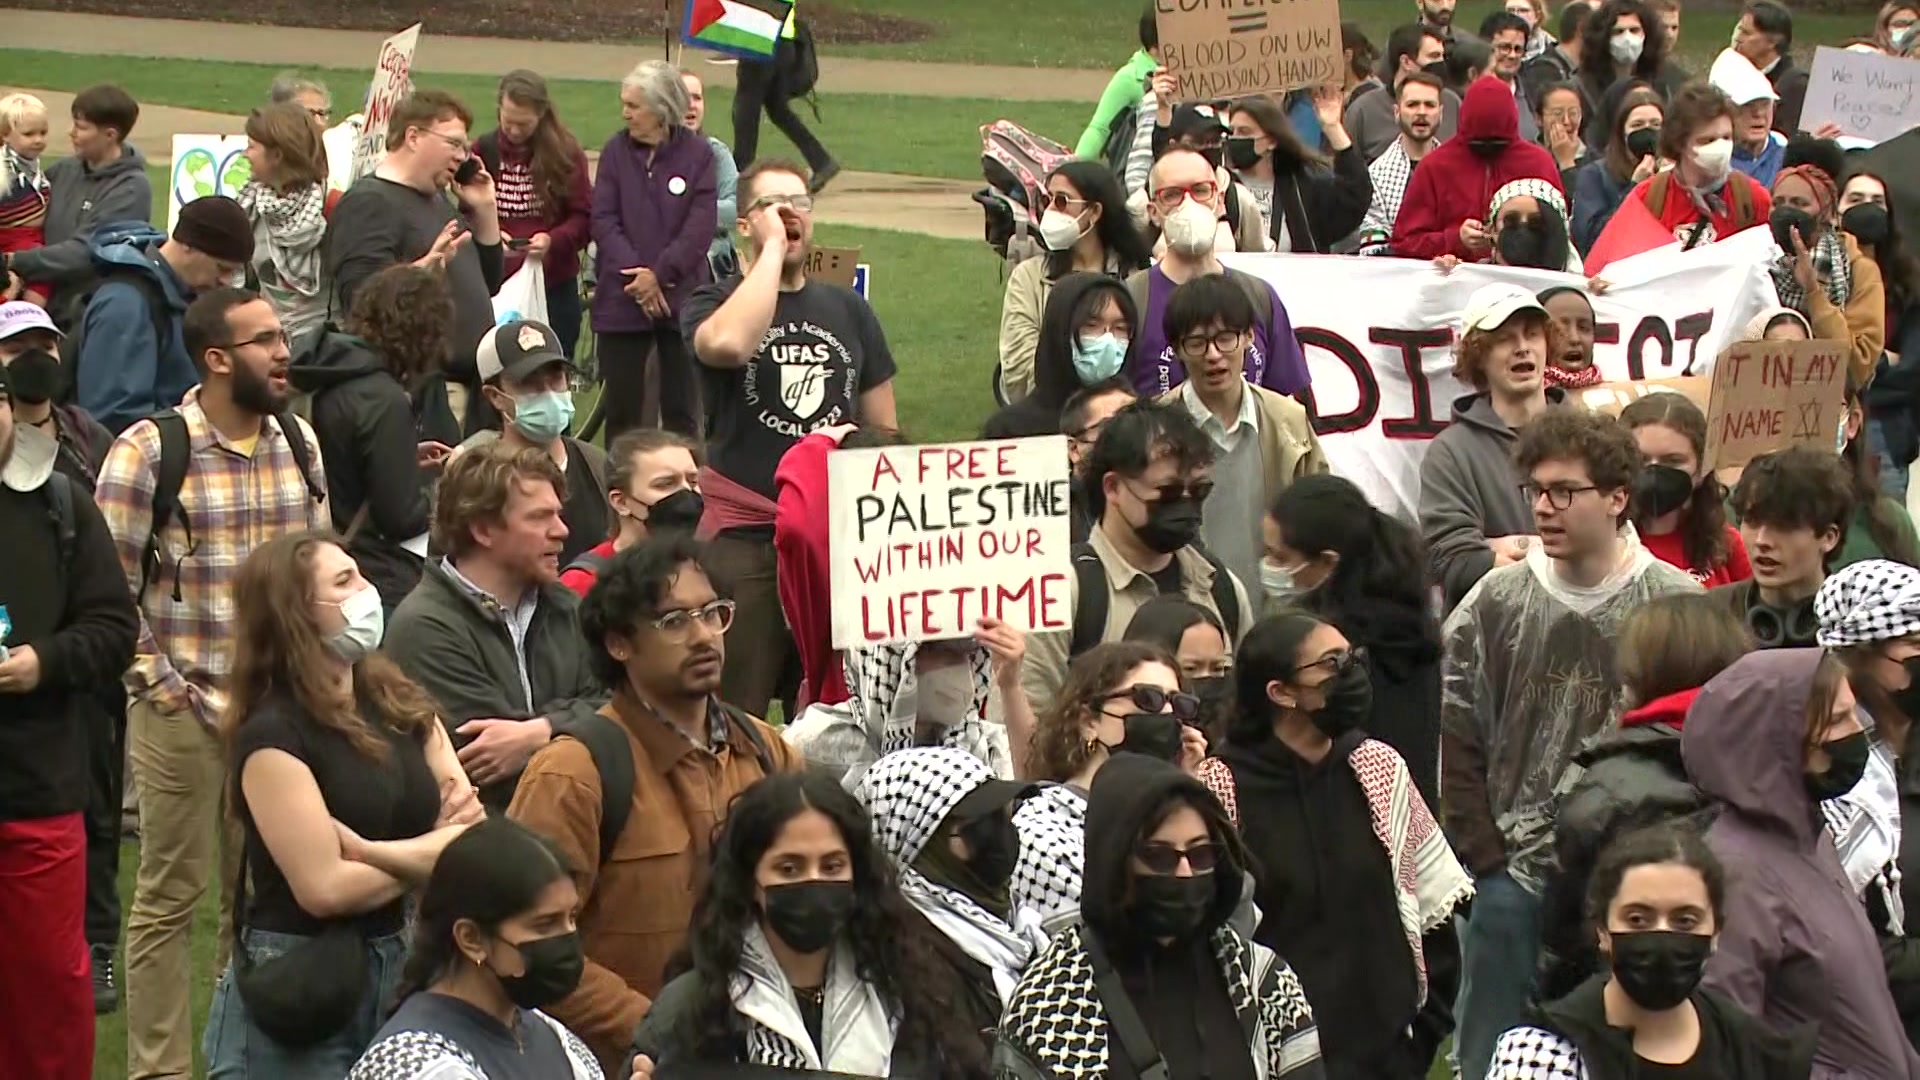 Pro-Palestinian protest at UW-Madison, activists ignore campus encampment ban [Video]